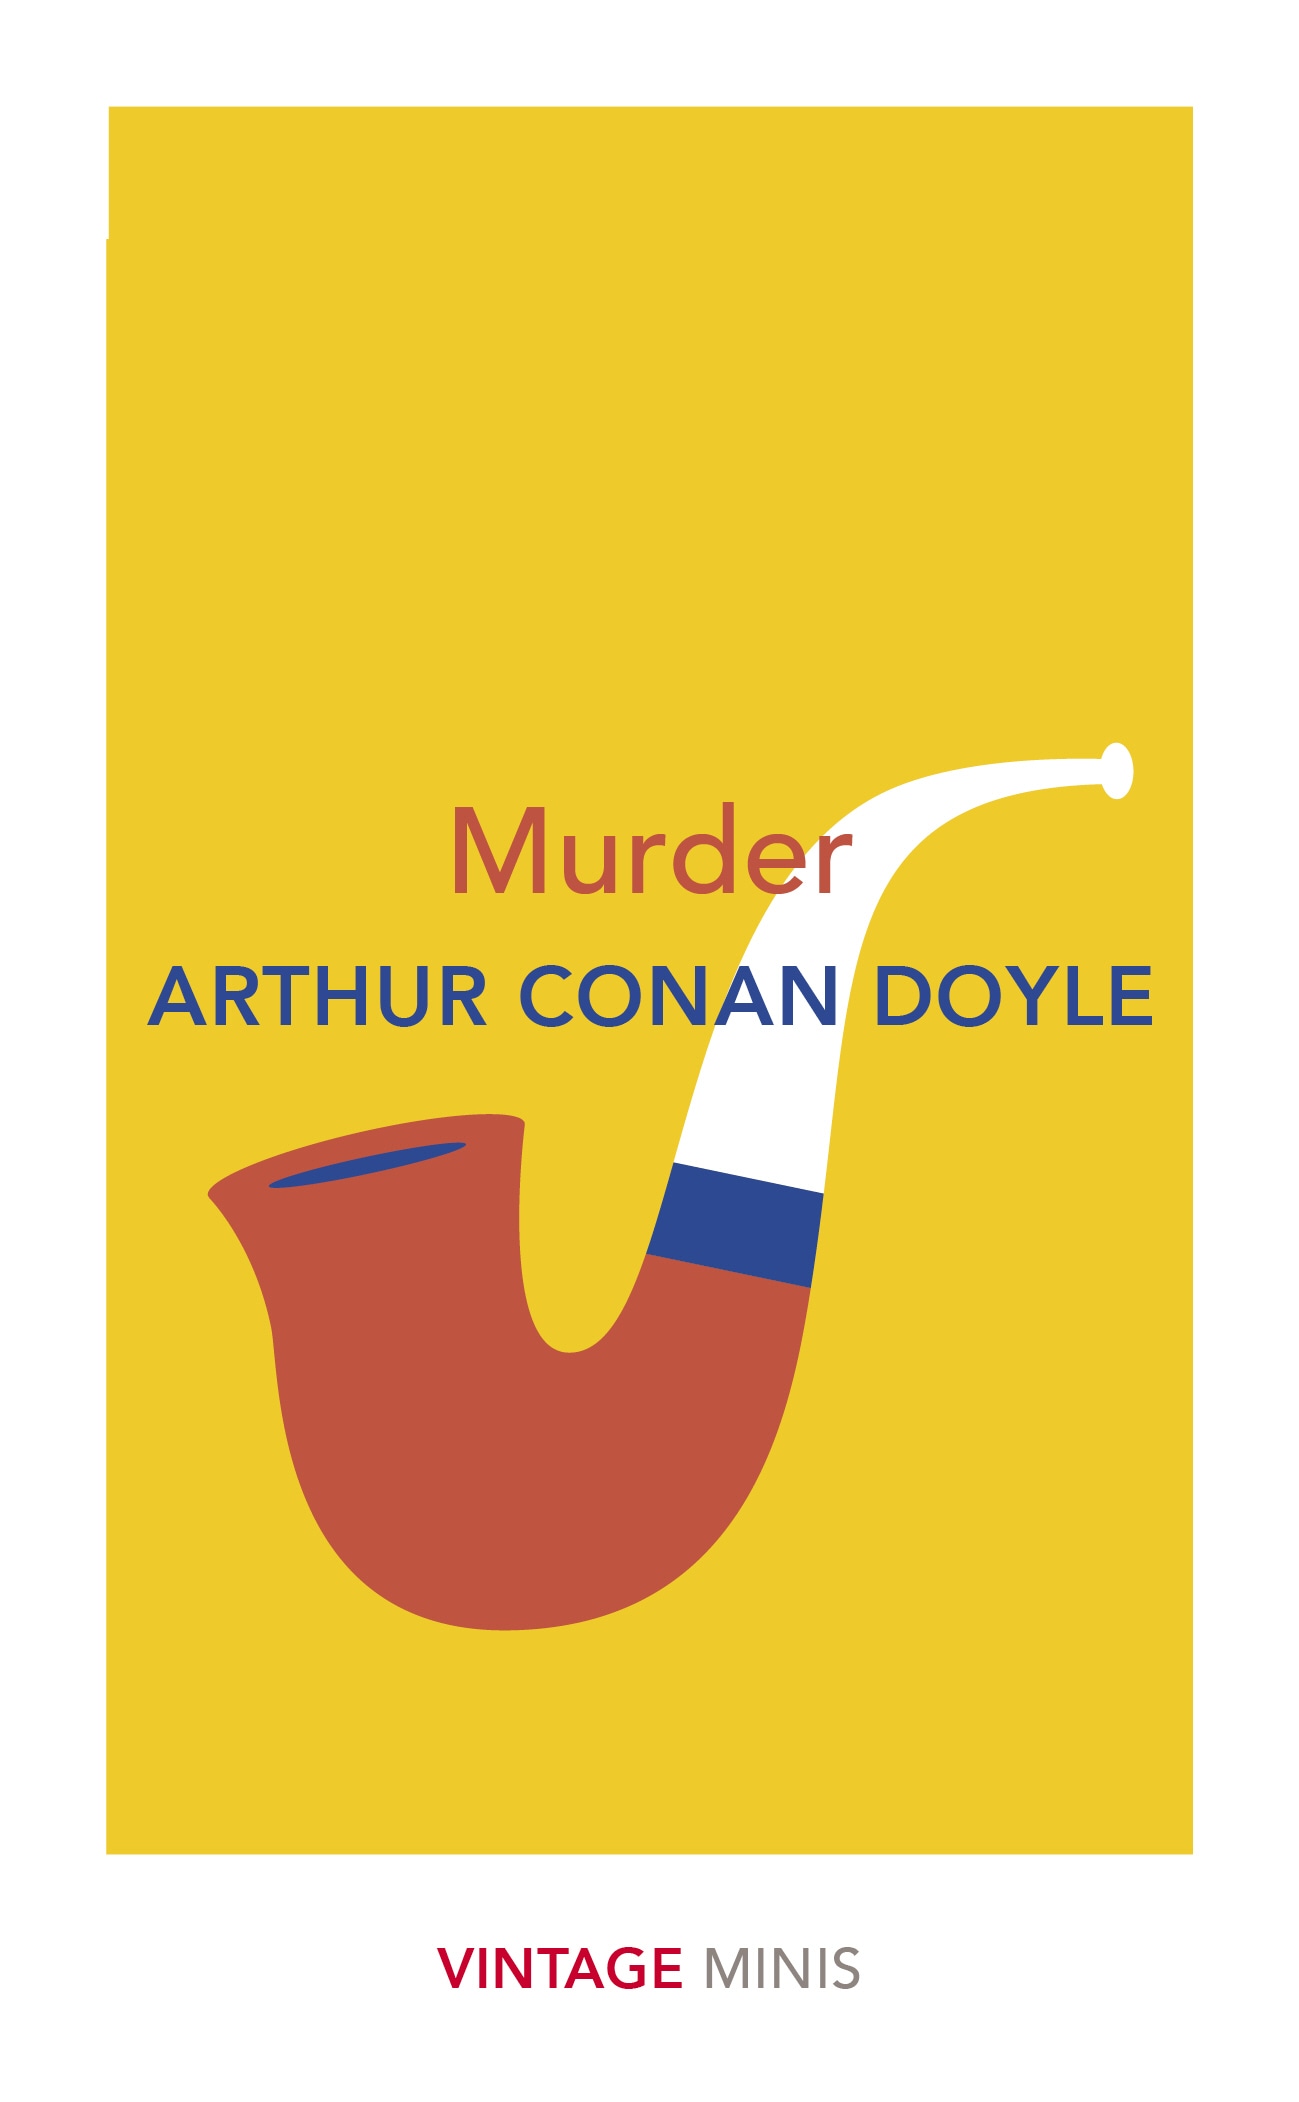 Book “Murder” by Arthur Conan Doyle — March 5, 2020